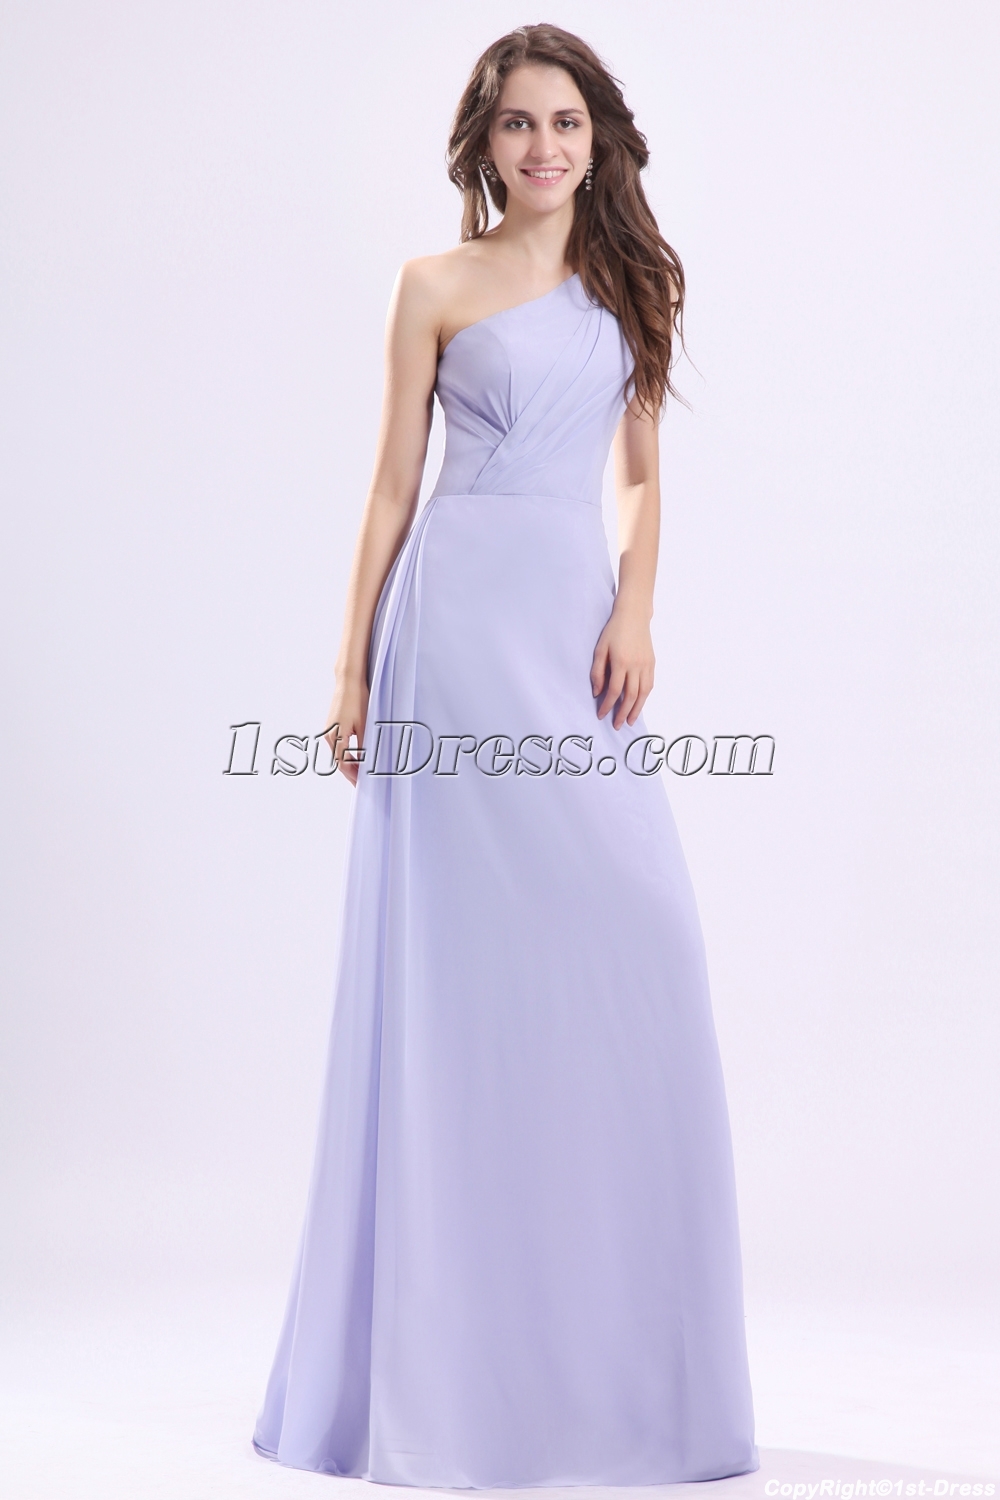 images/201311/big/Beautiful-Lavender-One-Shoulder-Homecoming-Dress-3517-b-1-1384426990.jpg